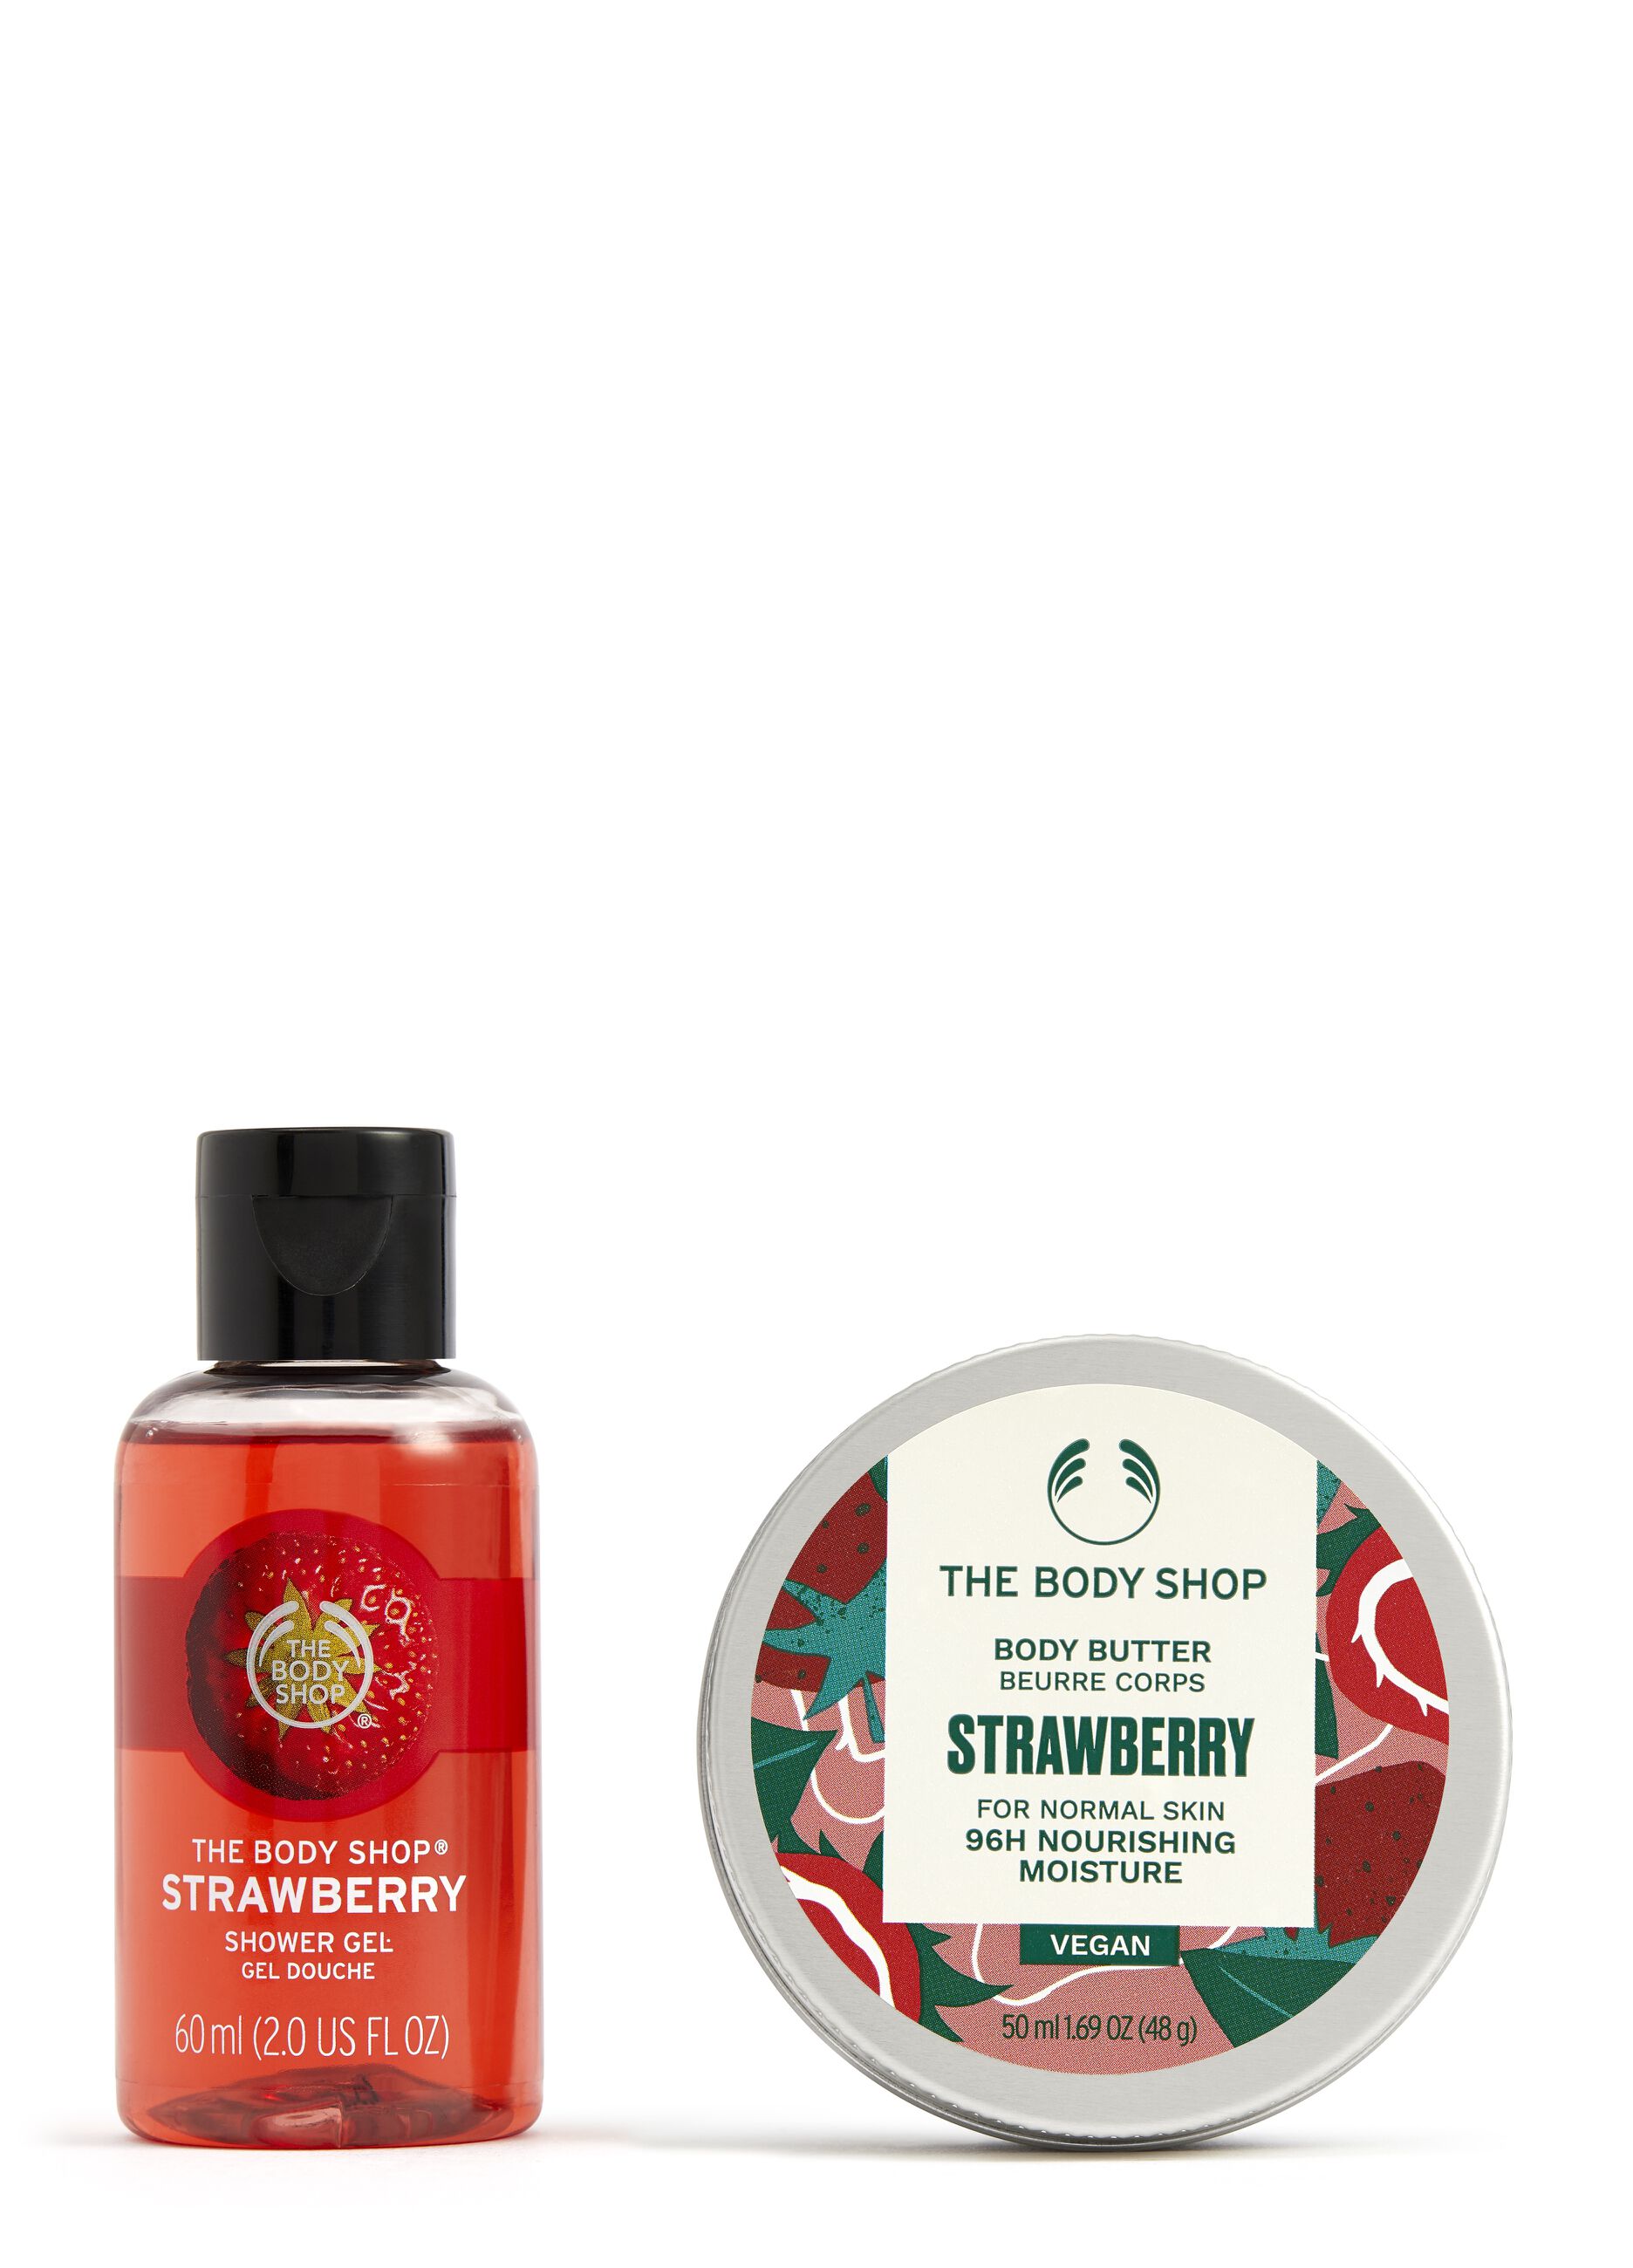 The Body Shop mini strawberry gift box